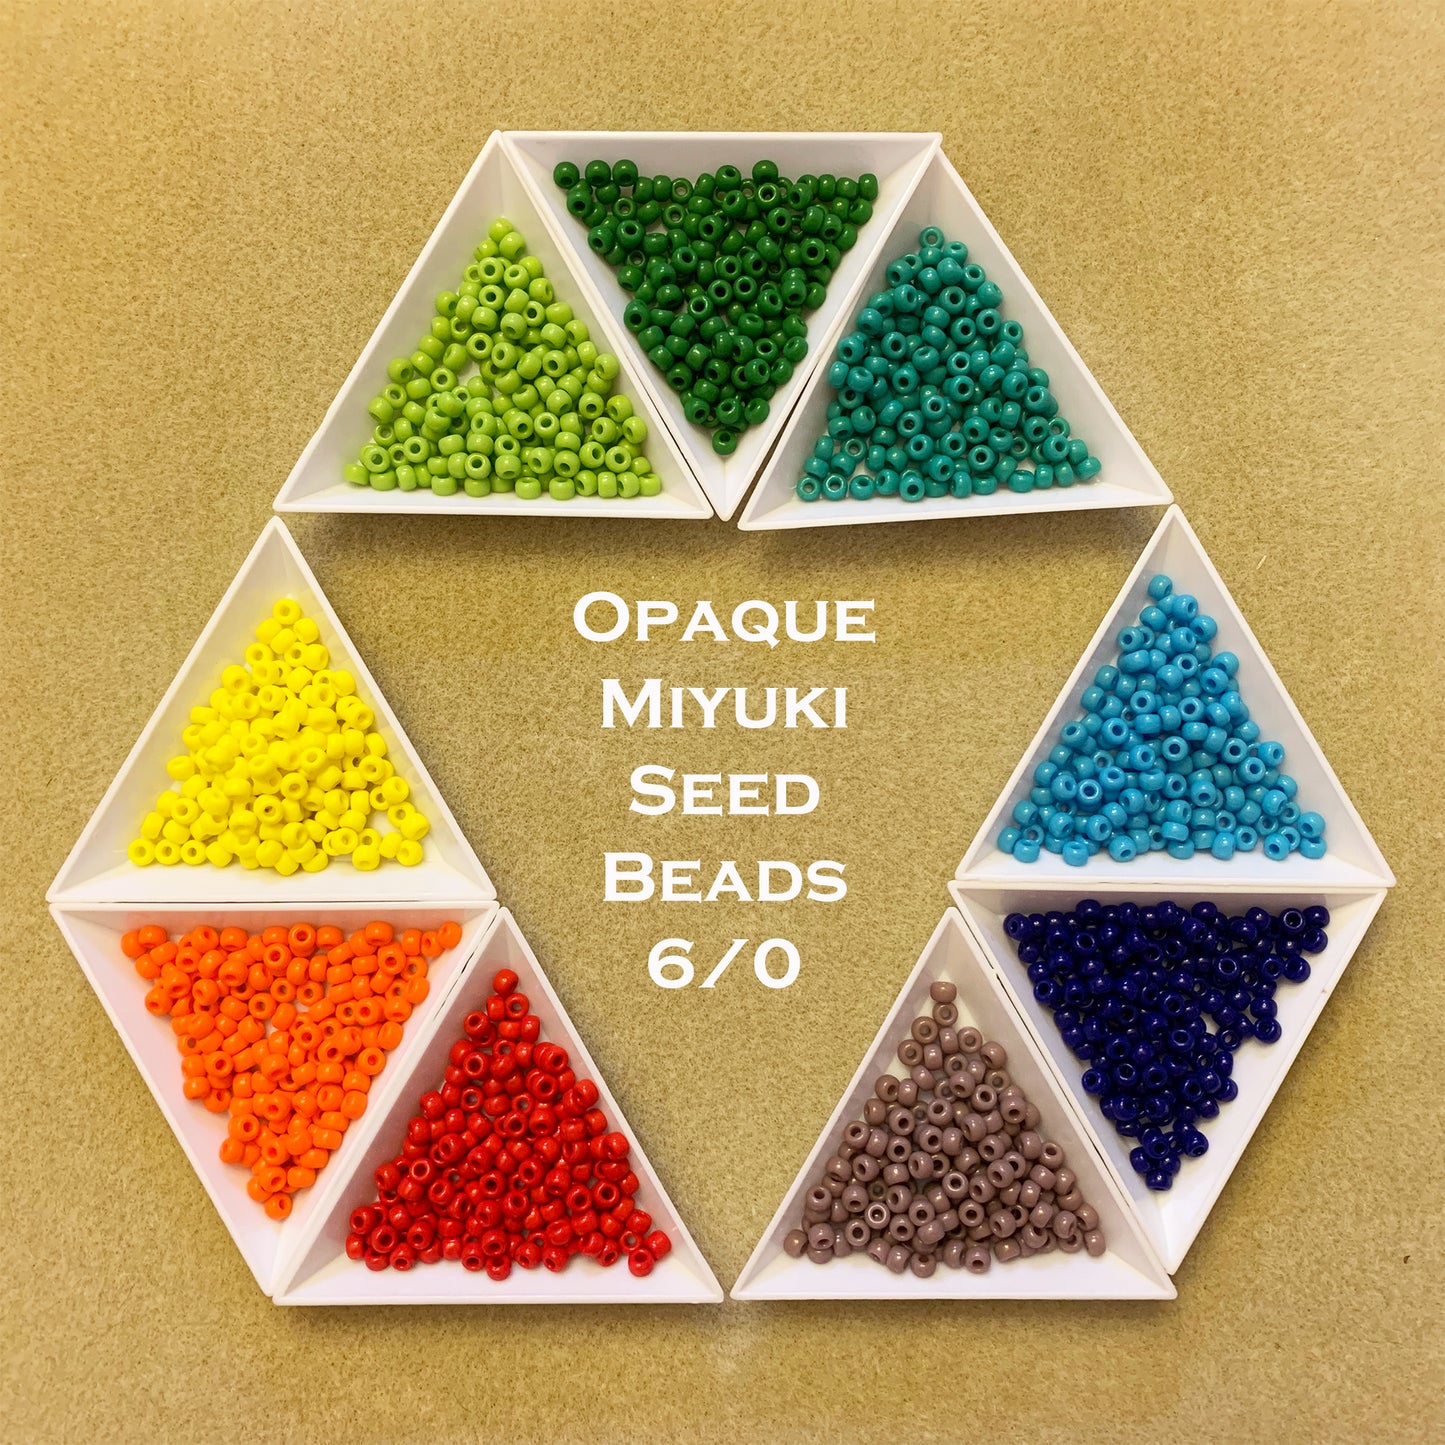 Miyuki Opaque Rainbow Seed Bead Set size 6/0